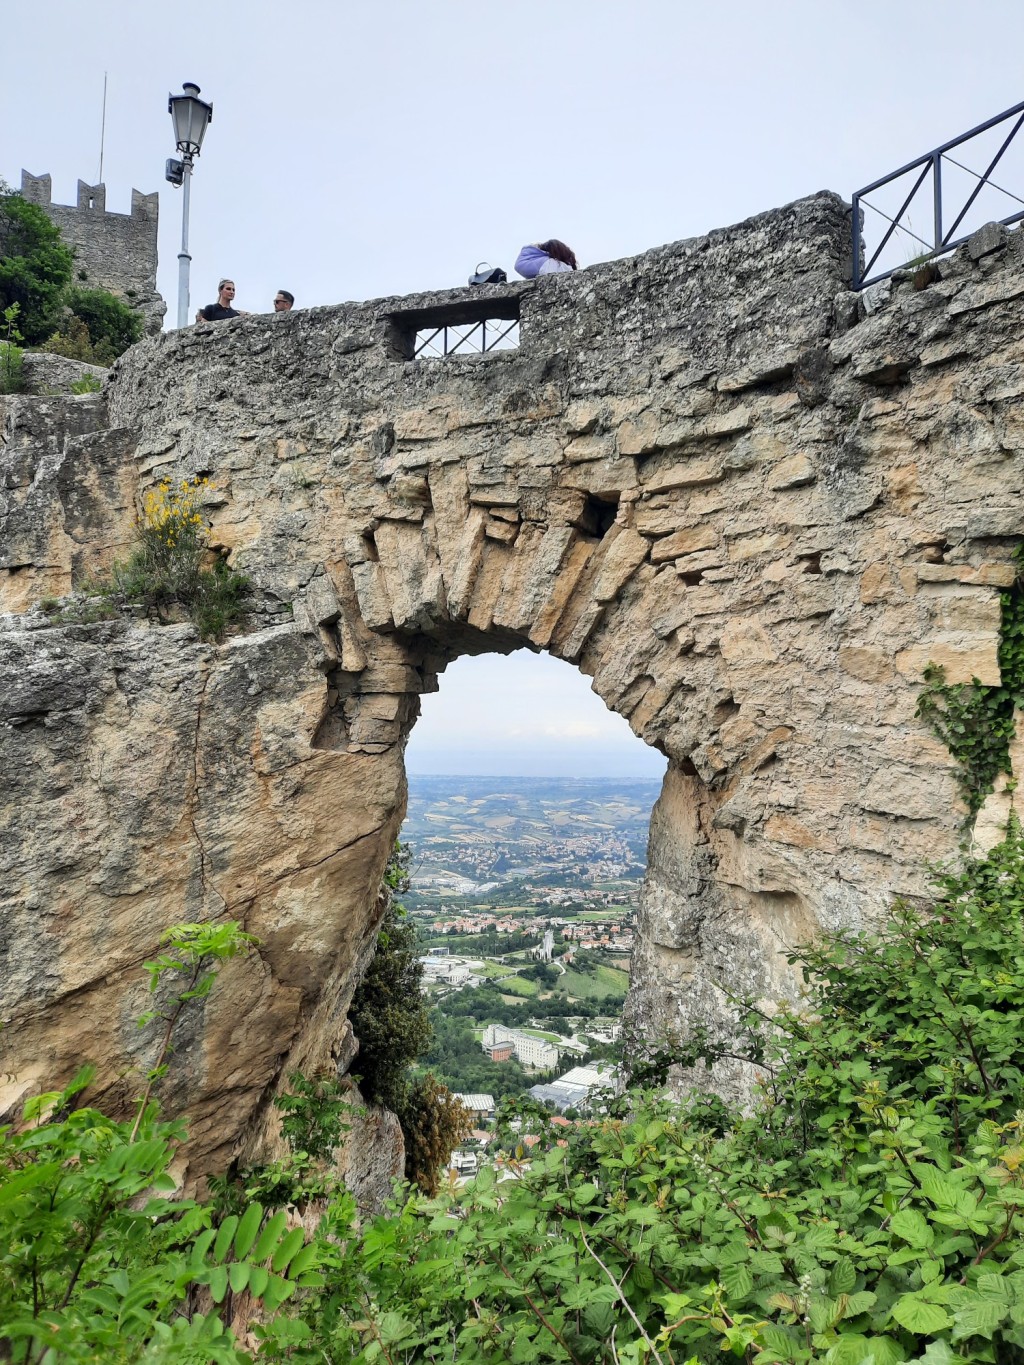 Detalles de San Marino. Puente entre Rocas.